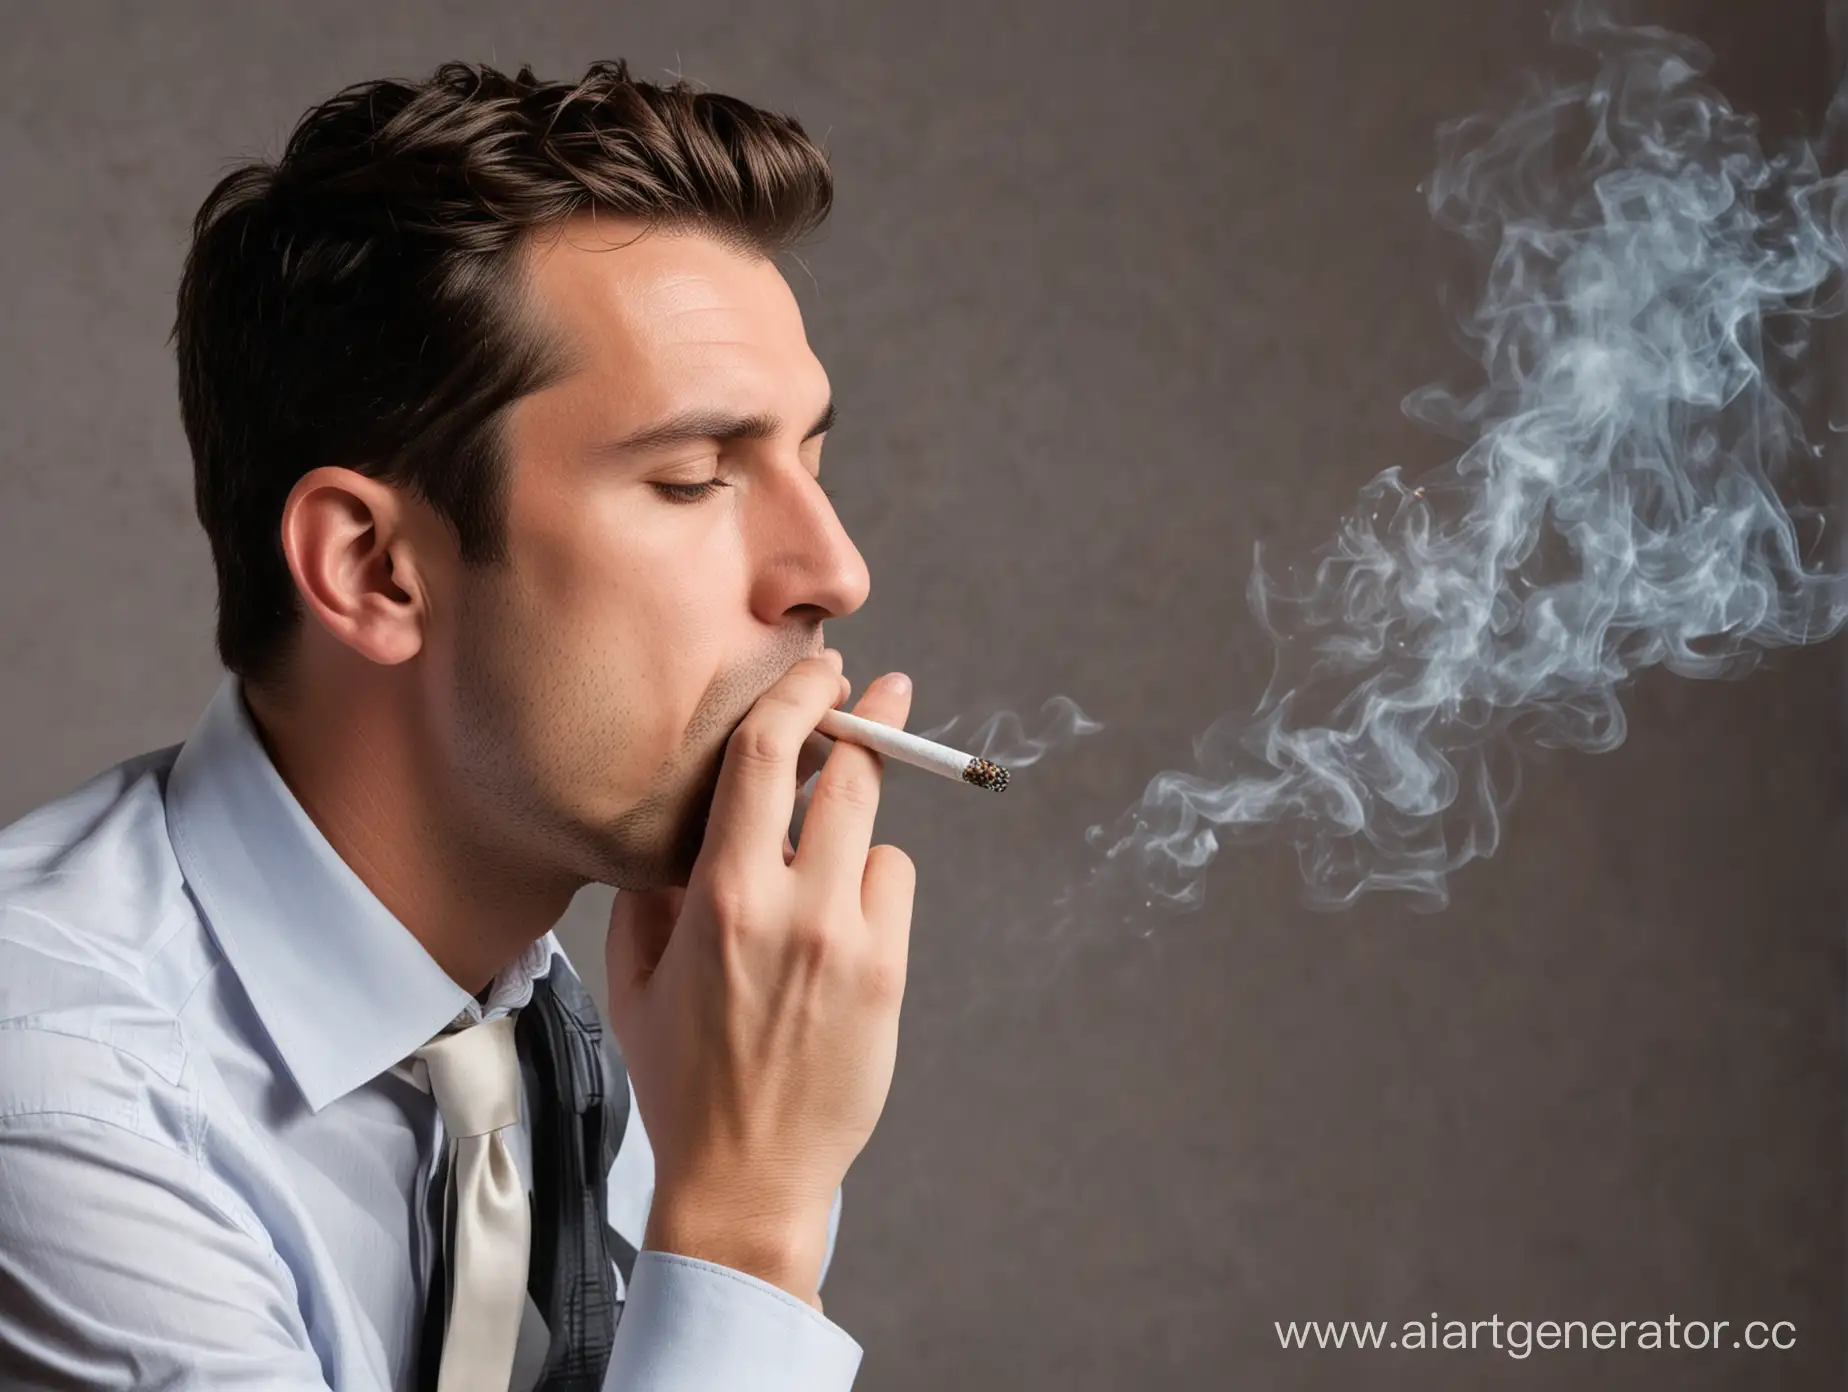 Man-Smoking-a-Cigarette-in-Urban-Setting